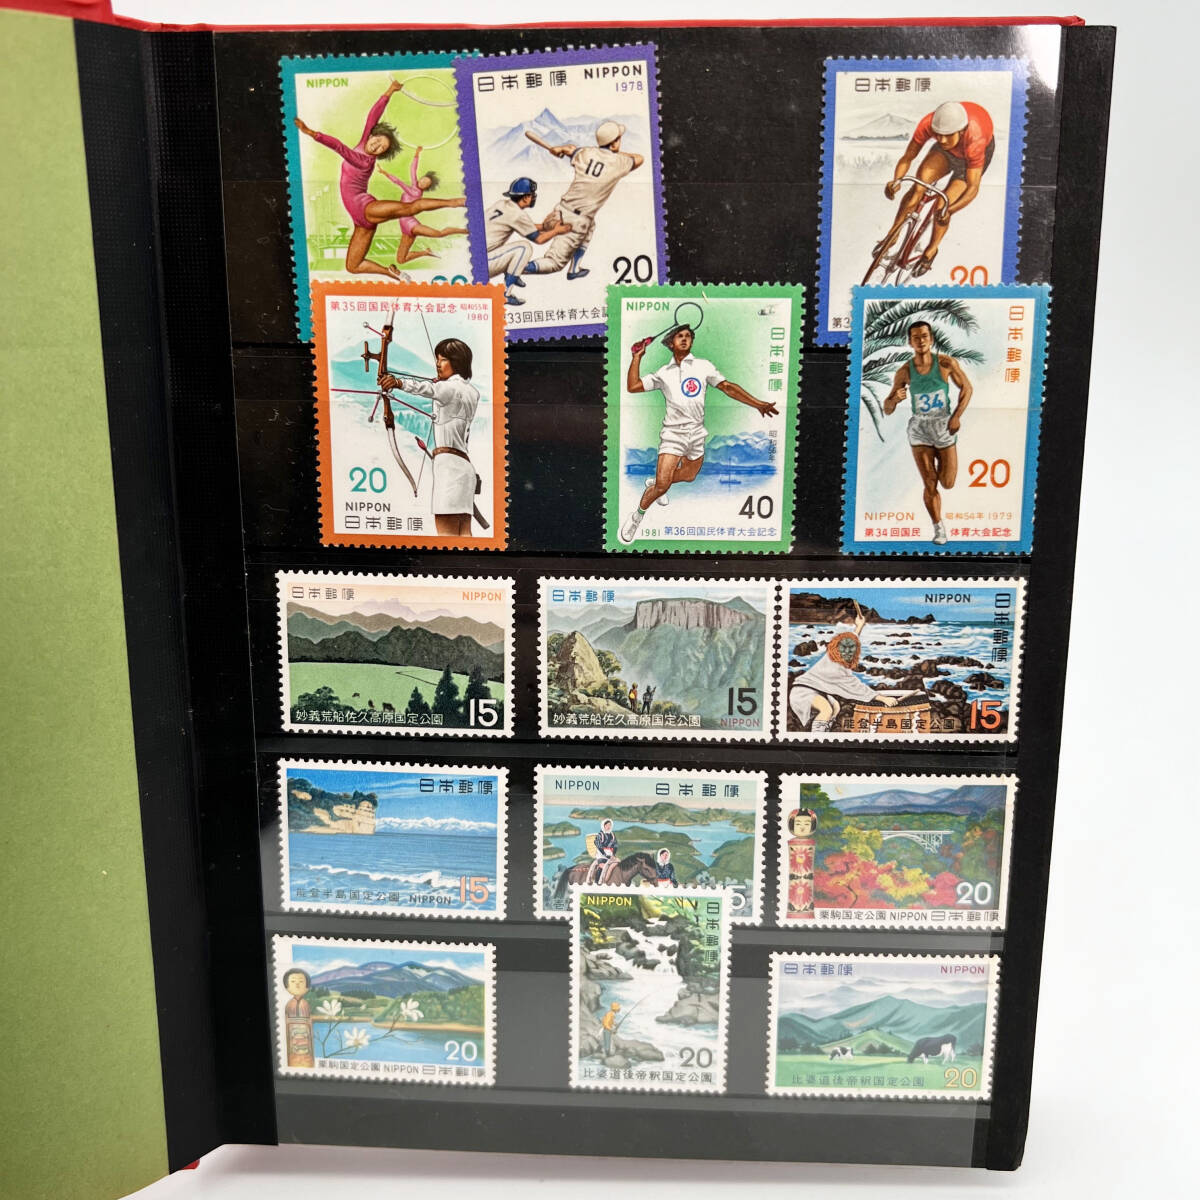  stamp collection album set sale antique commemorative stamp rare Apollo 